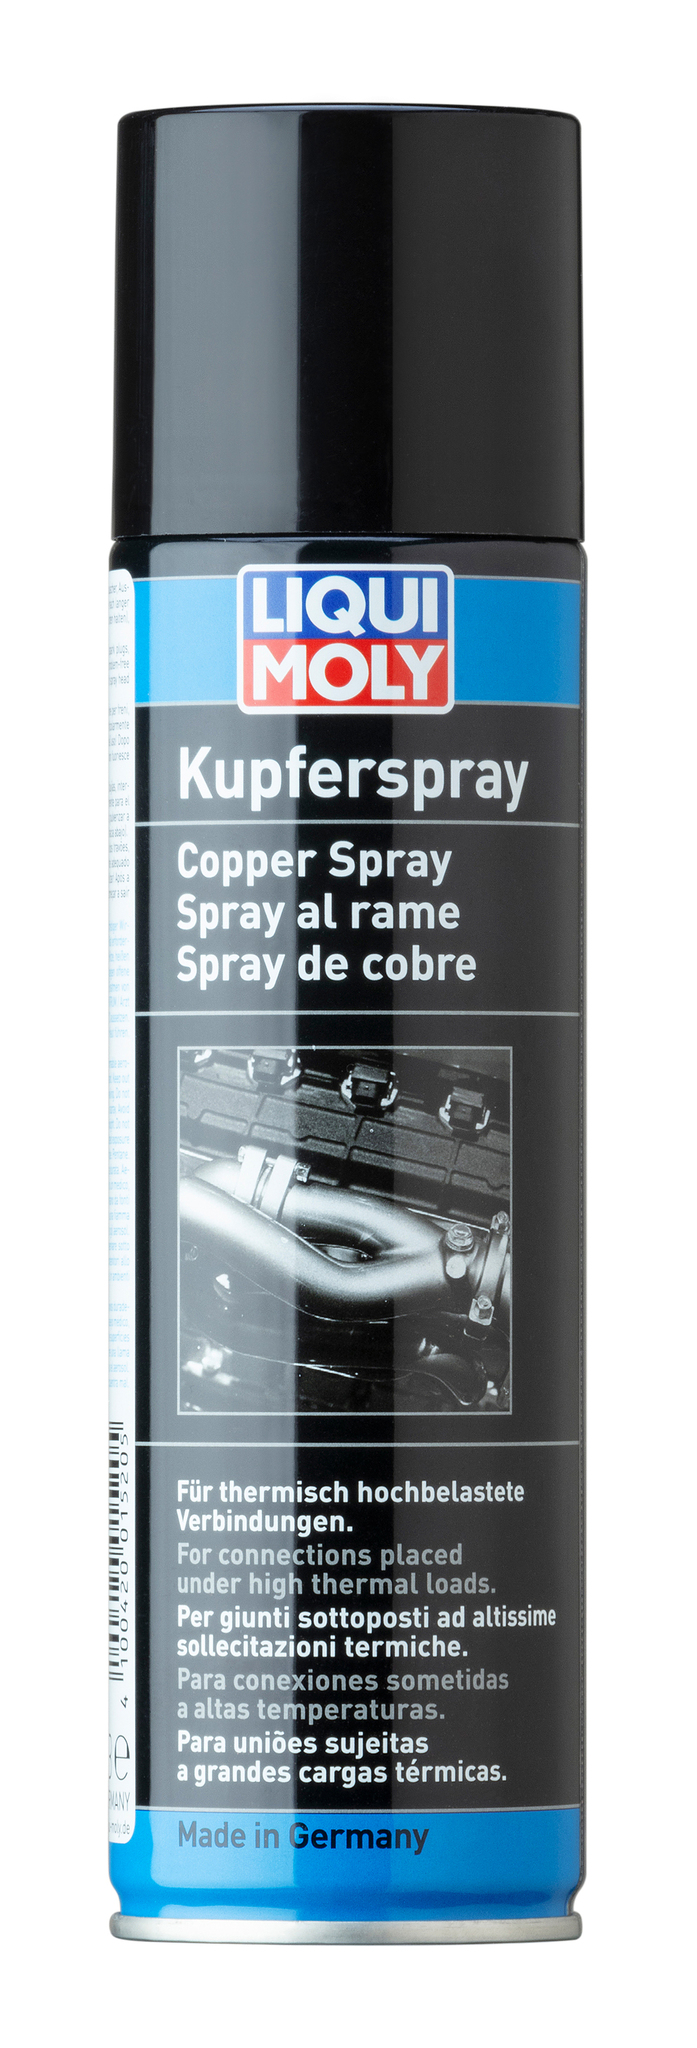 Liqui Moly Kupfer Spray Медный спрей